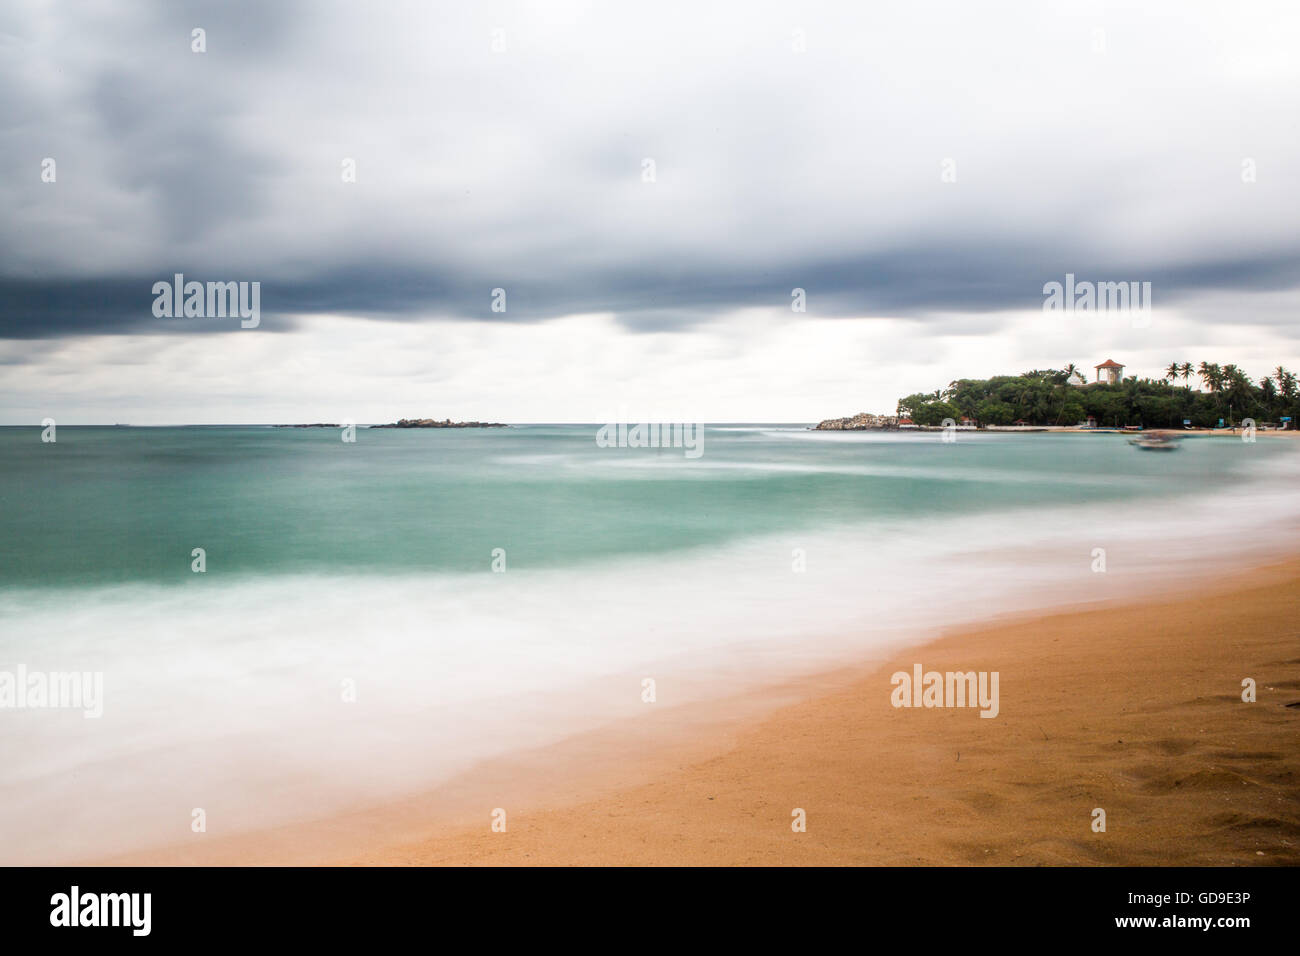 Long exposure shot of beach at Unawatuna, Sri Lanka during rainy season with grey clouds. Stock Photo